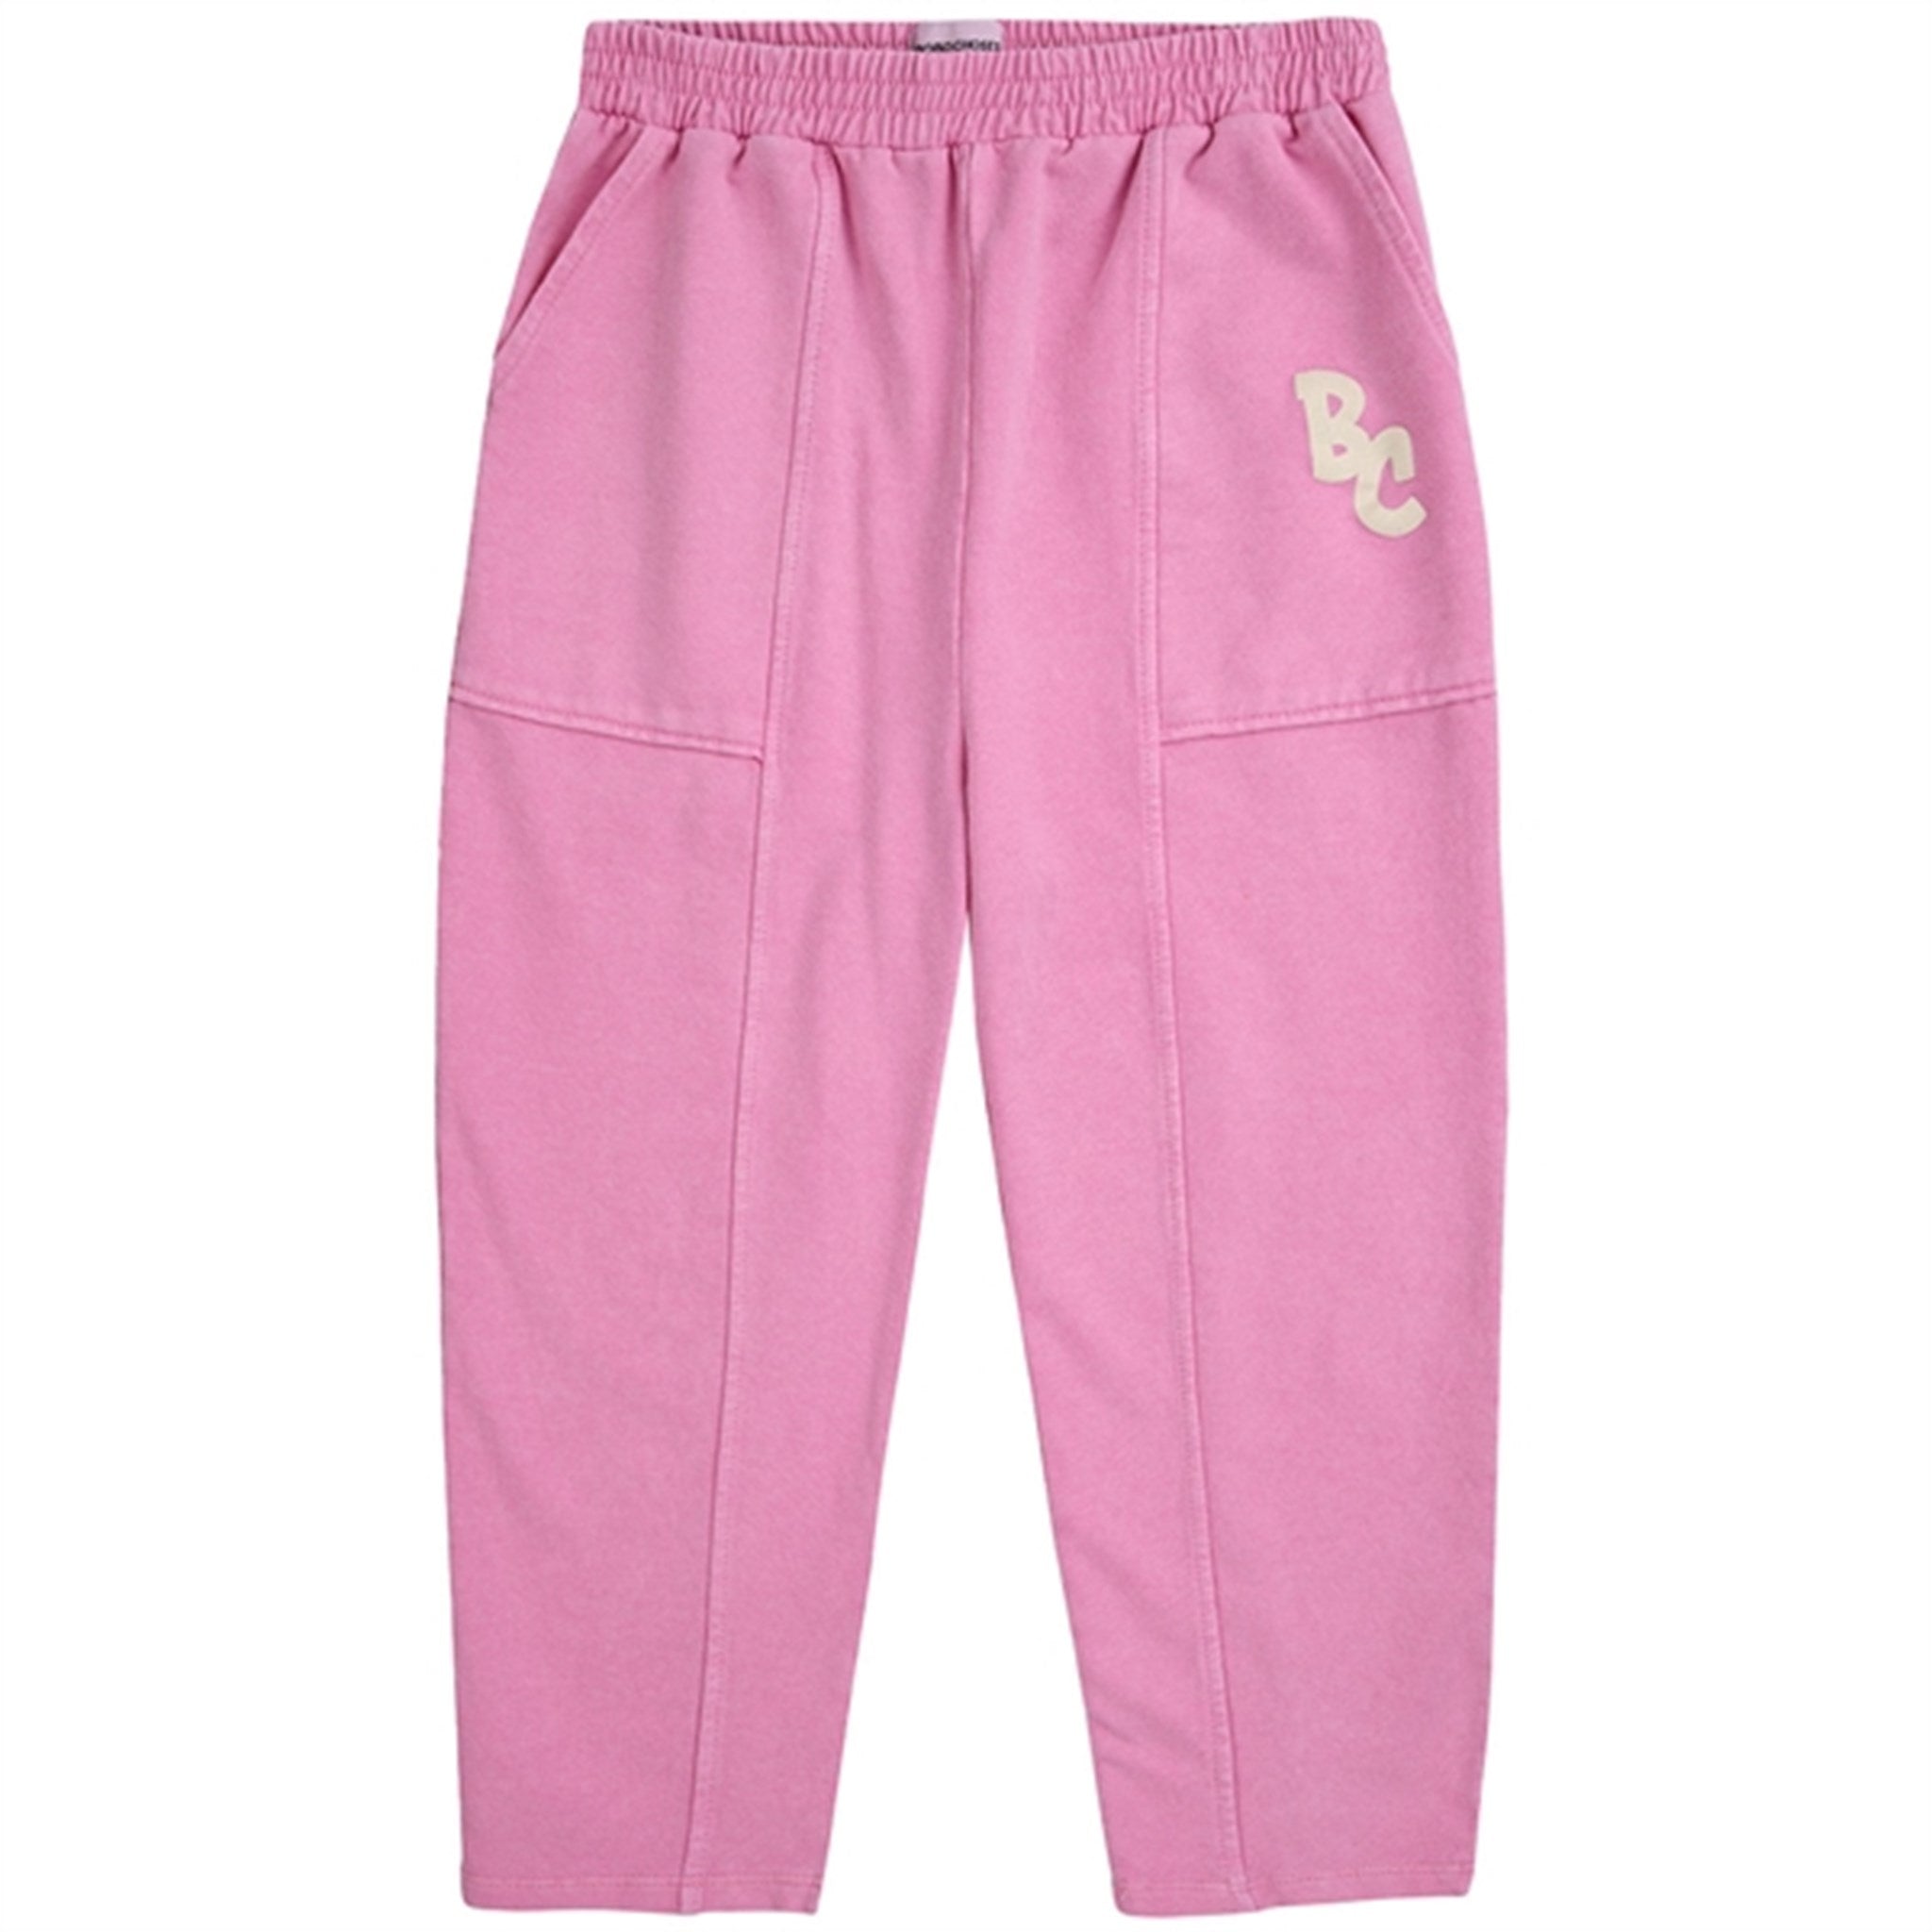 Bobo Choses B.C Pink Sweatpants Fuchsia